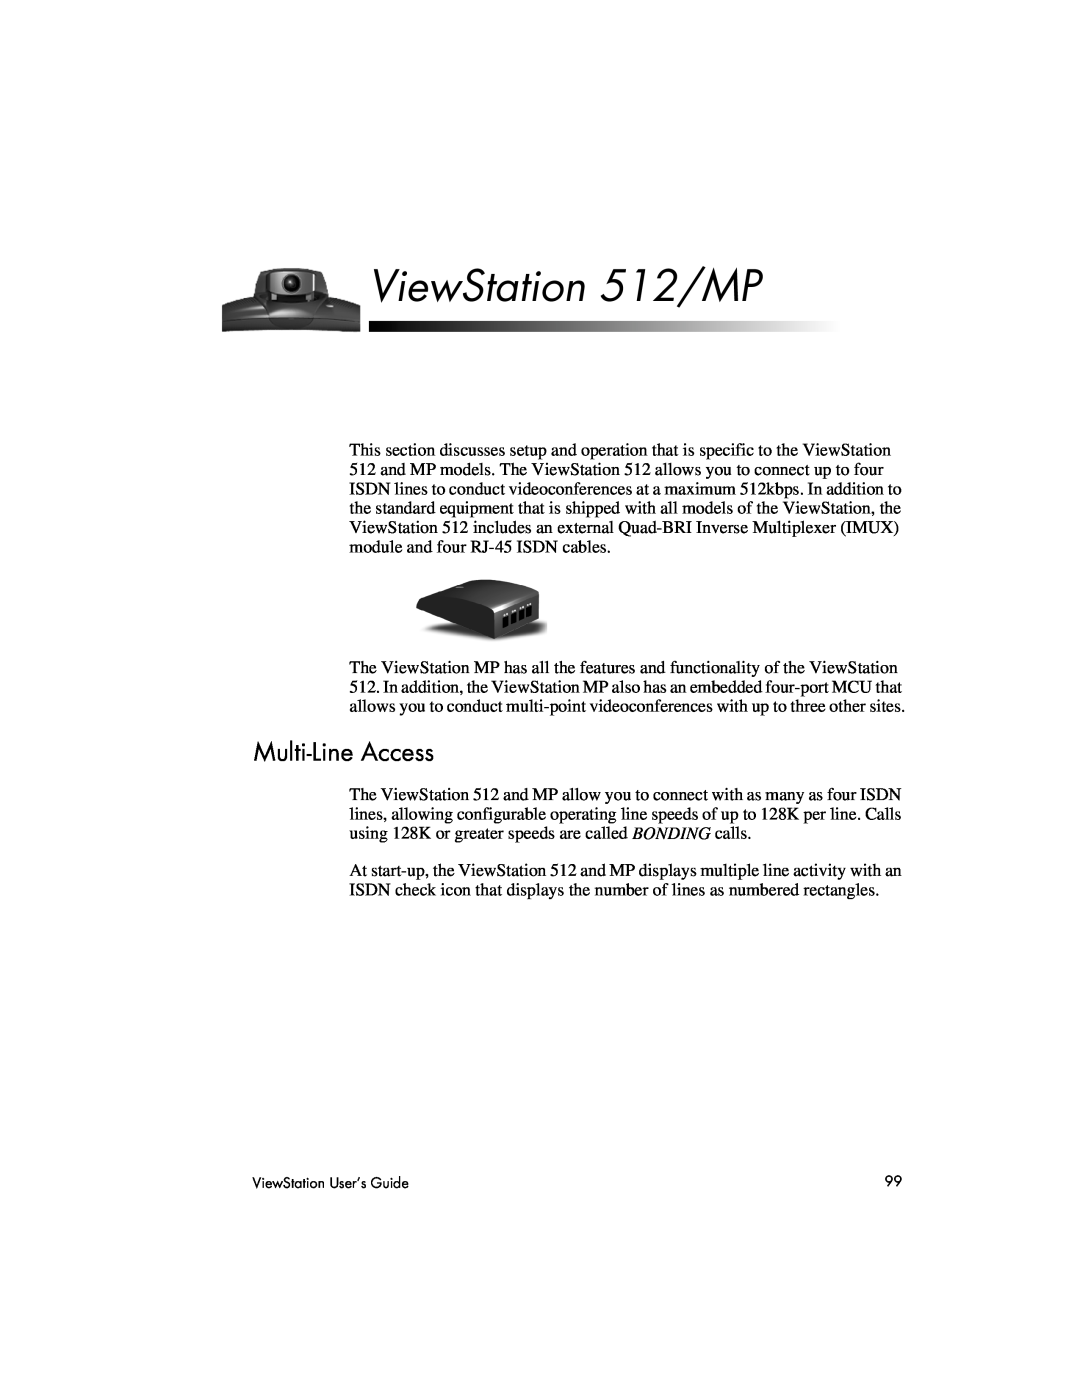 Polycom 128 manual ViewStation 512/MP, Multi-Line Access 